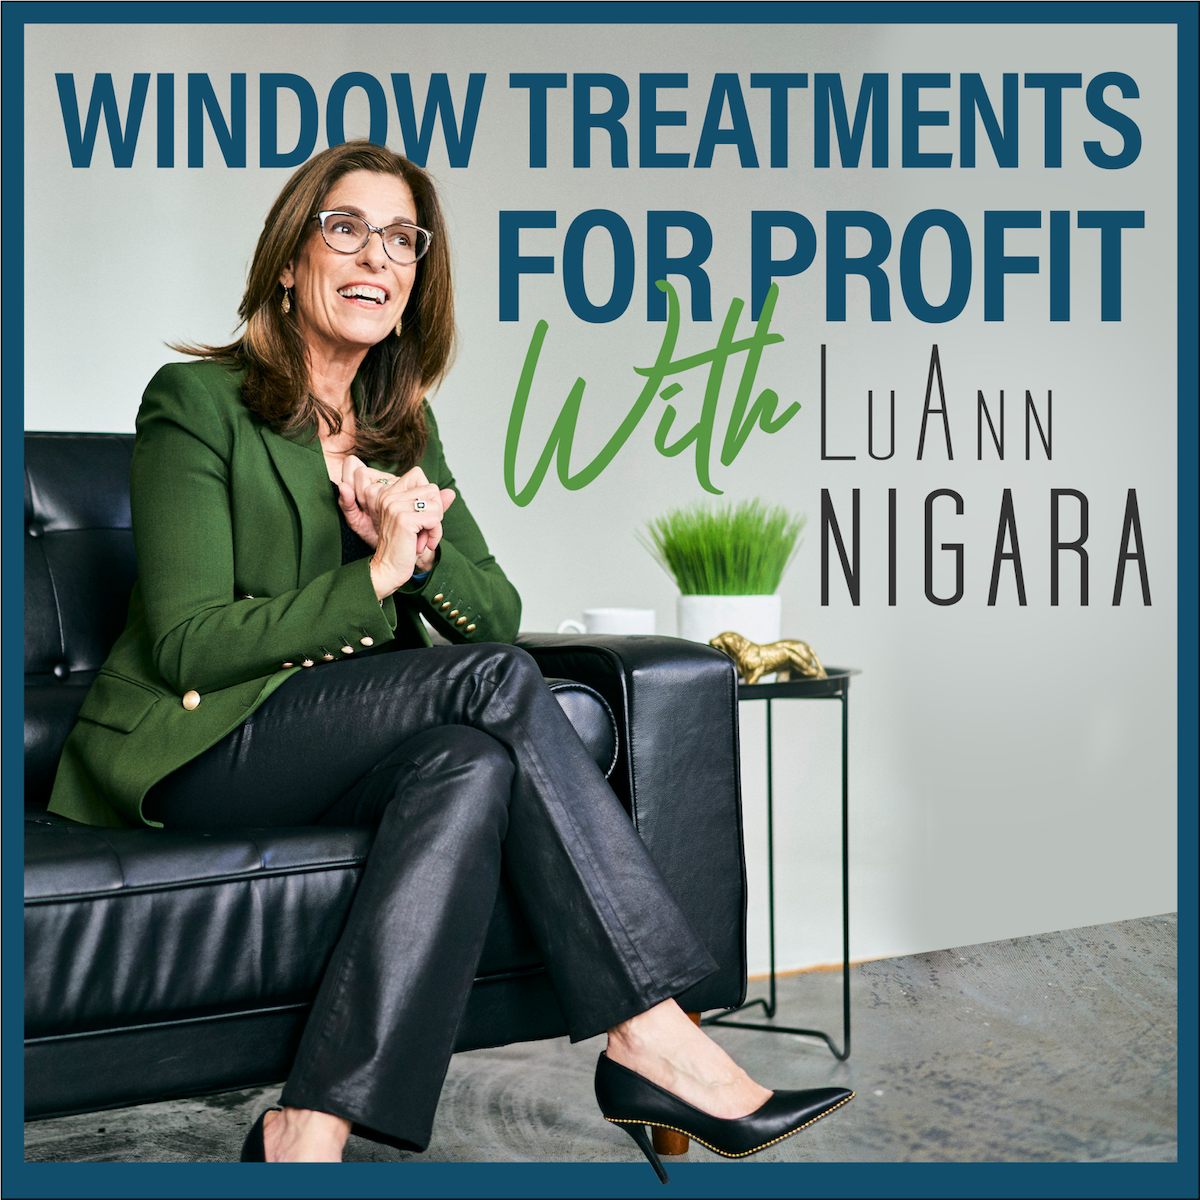 268: Vita Vygovska: Empower Your Window Treatment Sales Force